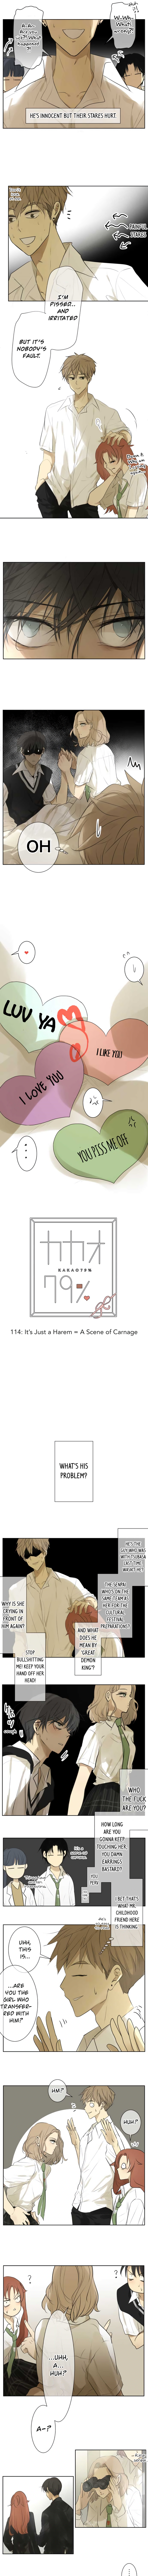 KAKAO 79% Ch. 114 It’s Just a Harem = A Scene of Carnage